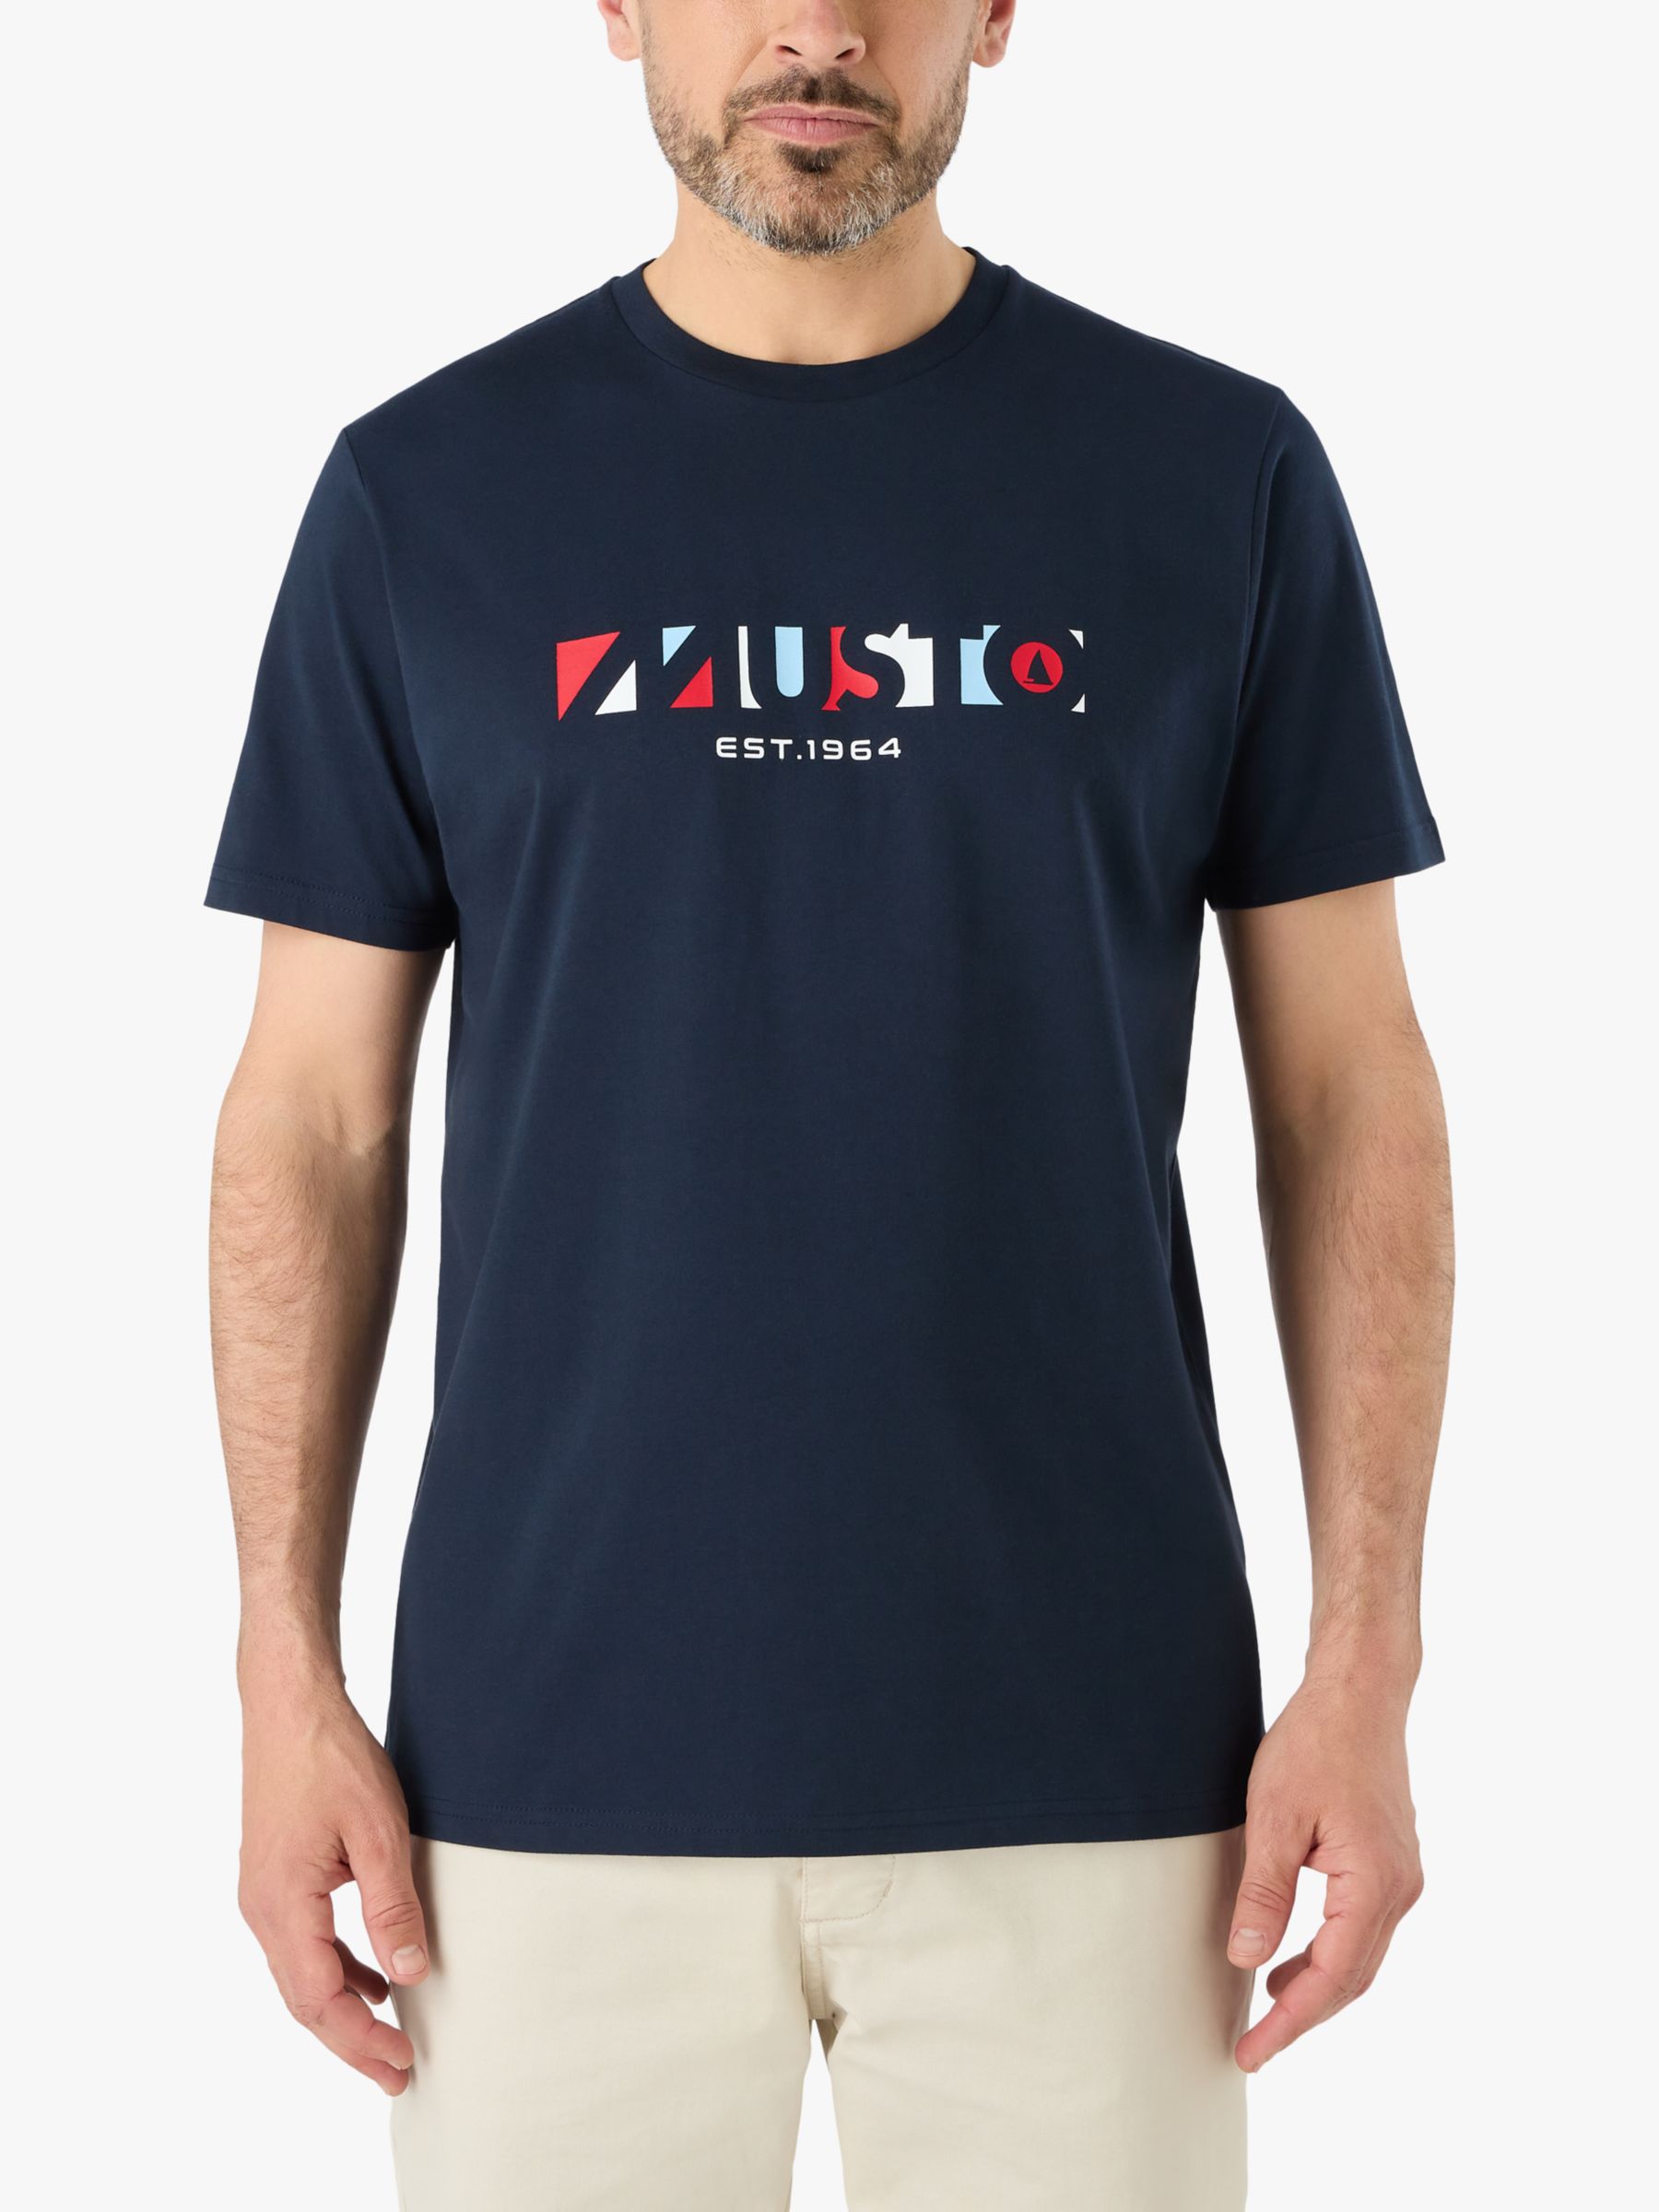 Musto 60th Anniversary Logo Short Sleeve T-Shirt, Navy, M